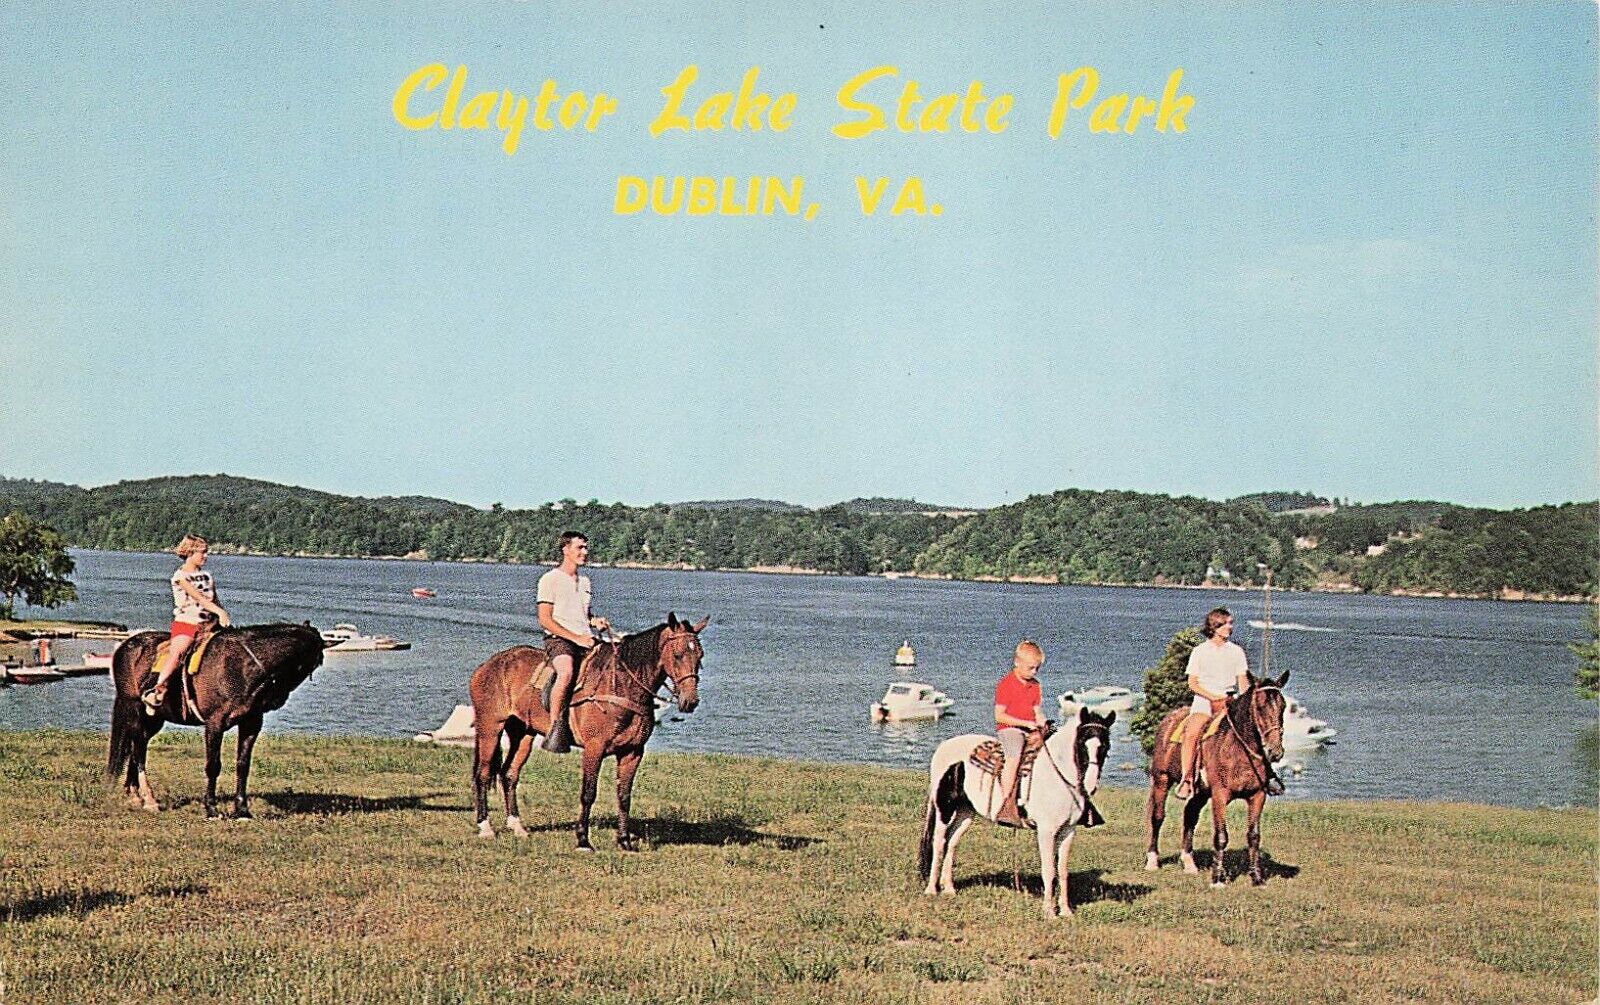 Dublin VA Virginia Claytor Lake State Park Appalachian Power Vtg Postcard E15